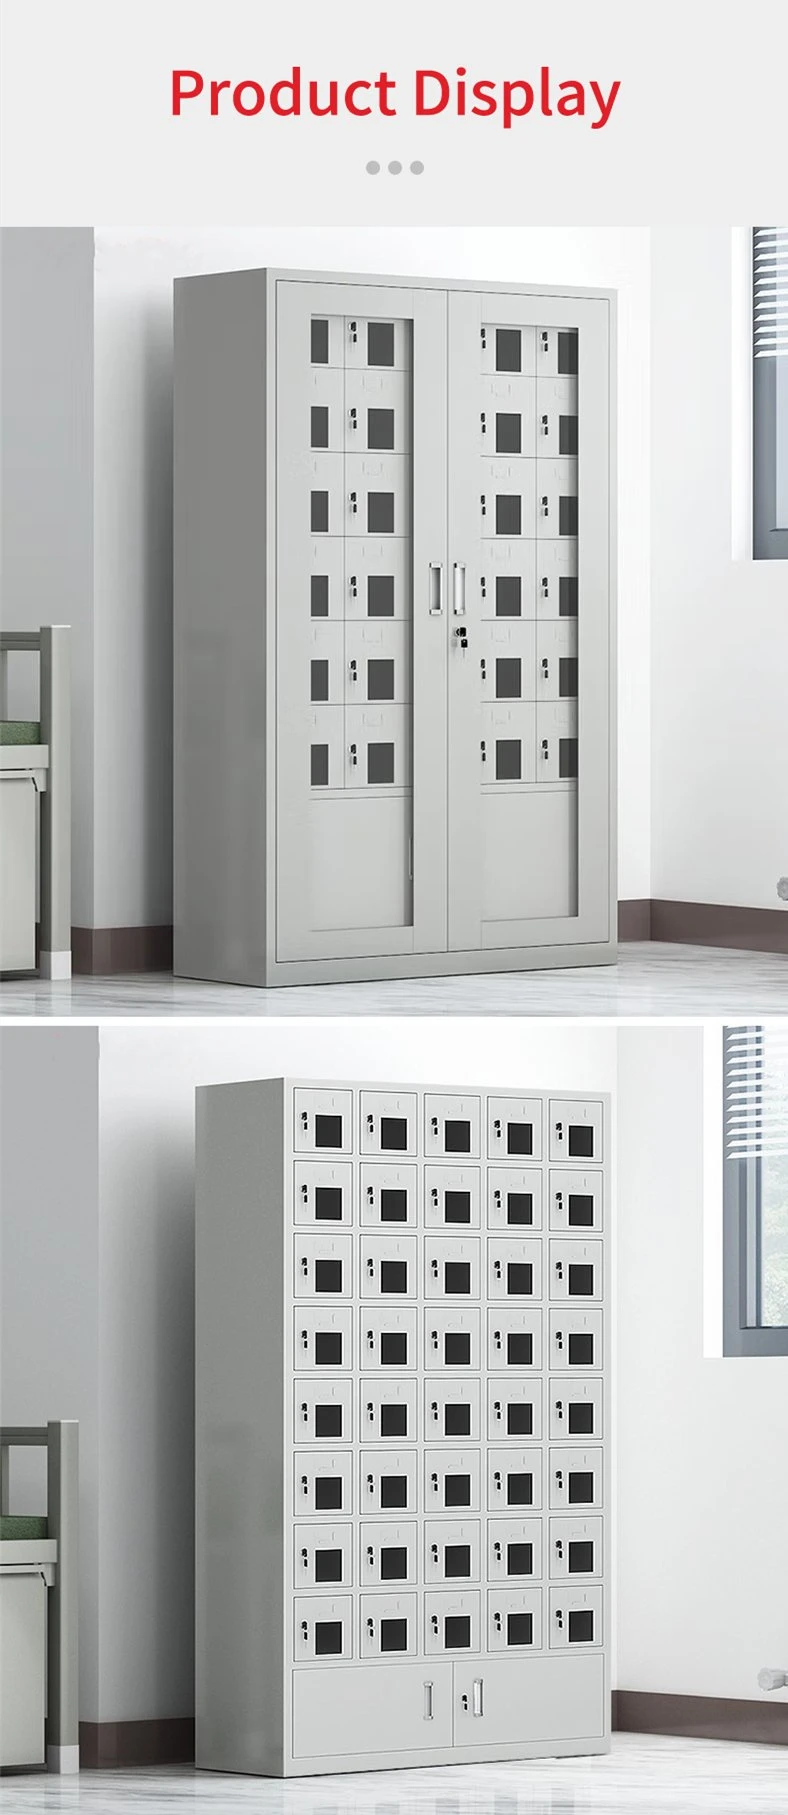 Multiple Doors Metal Staff Cellphone Storage Locker Metal Multi Compartment 8 Tier Gym Locker Room Design Lockable